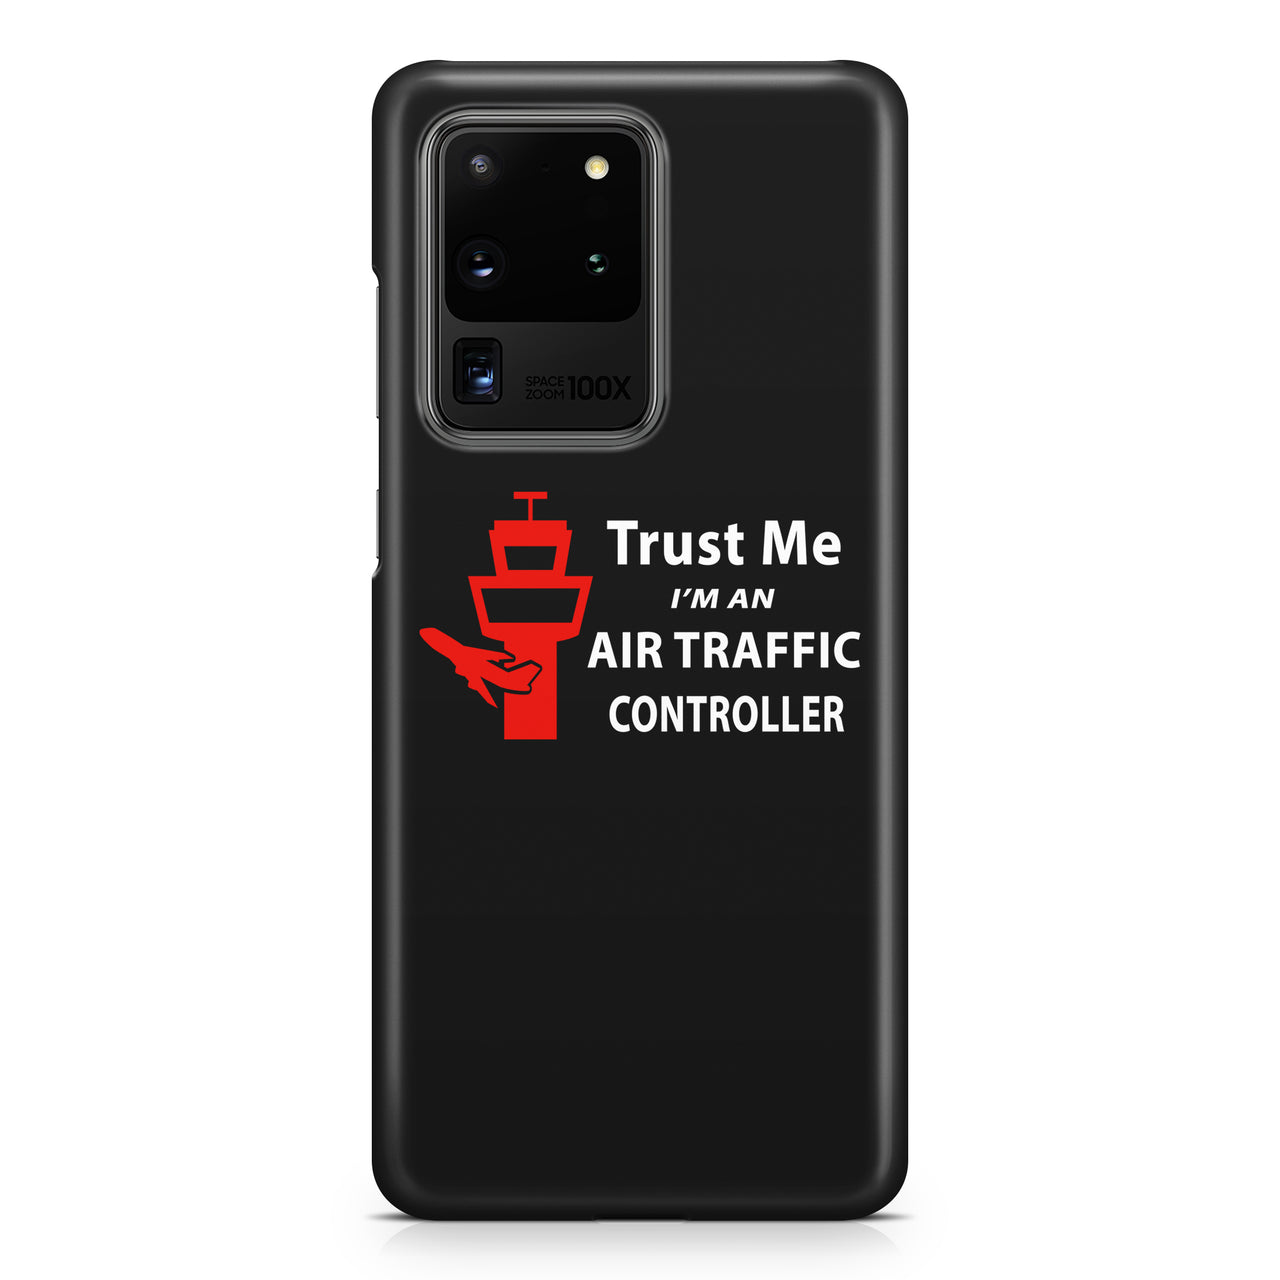 Trust Me I'm an Air Traffic Controller Samsung A Cases